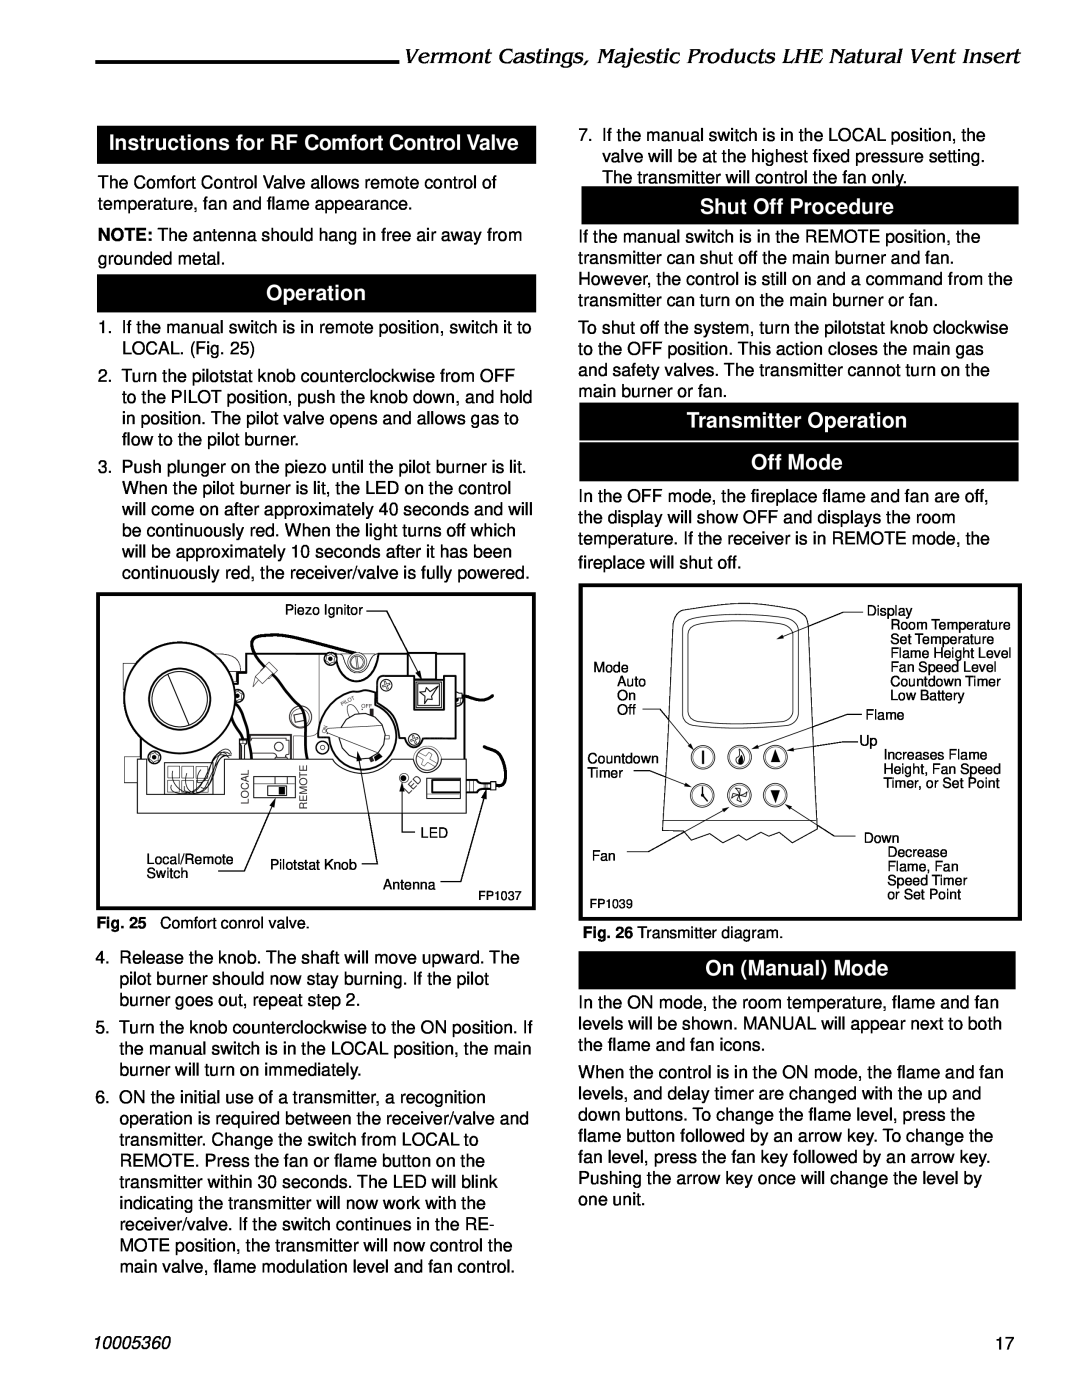 Vermont Casting LHEC30 Instructions for RF Comfort Control Valve, Operation, Shut Off Procedure, On Manual Mode, 10005360 